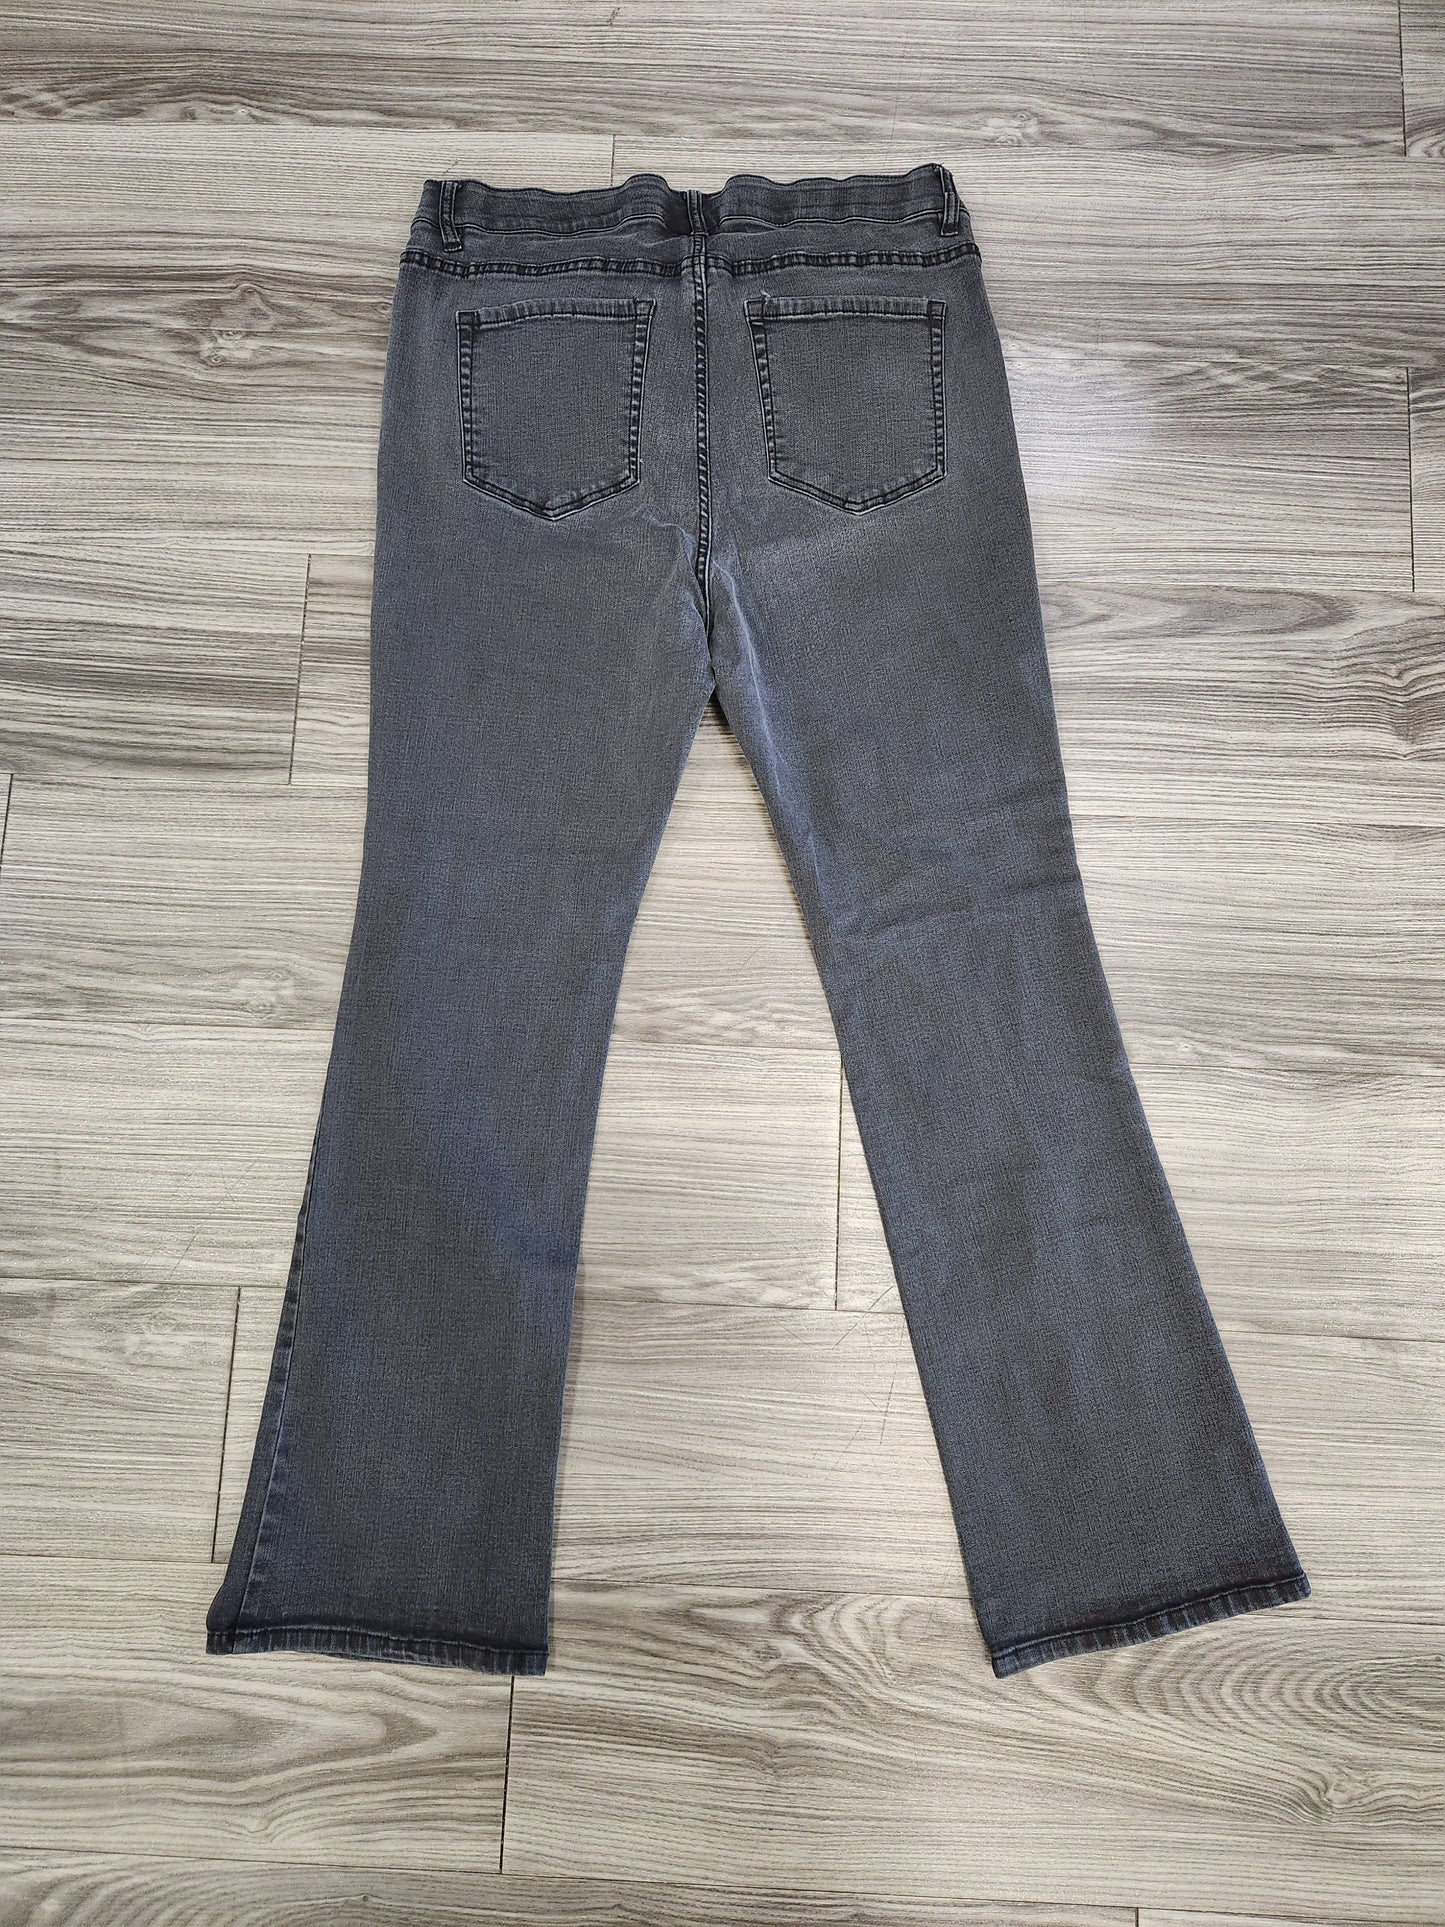 Jeans Flared By Venezia  Size: 18